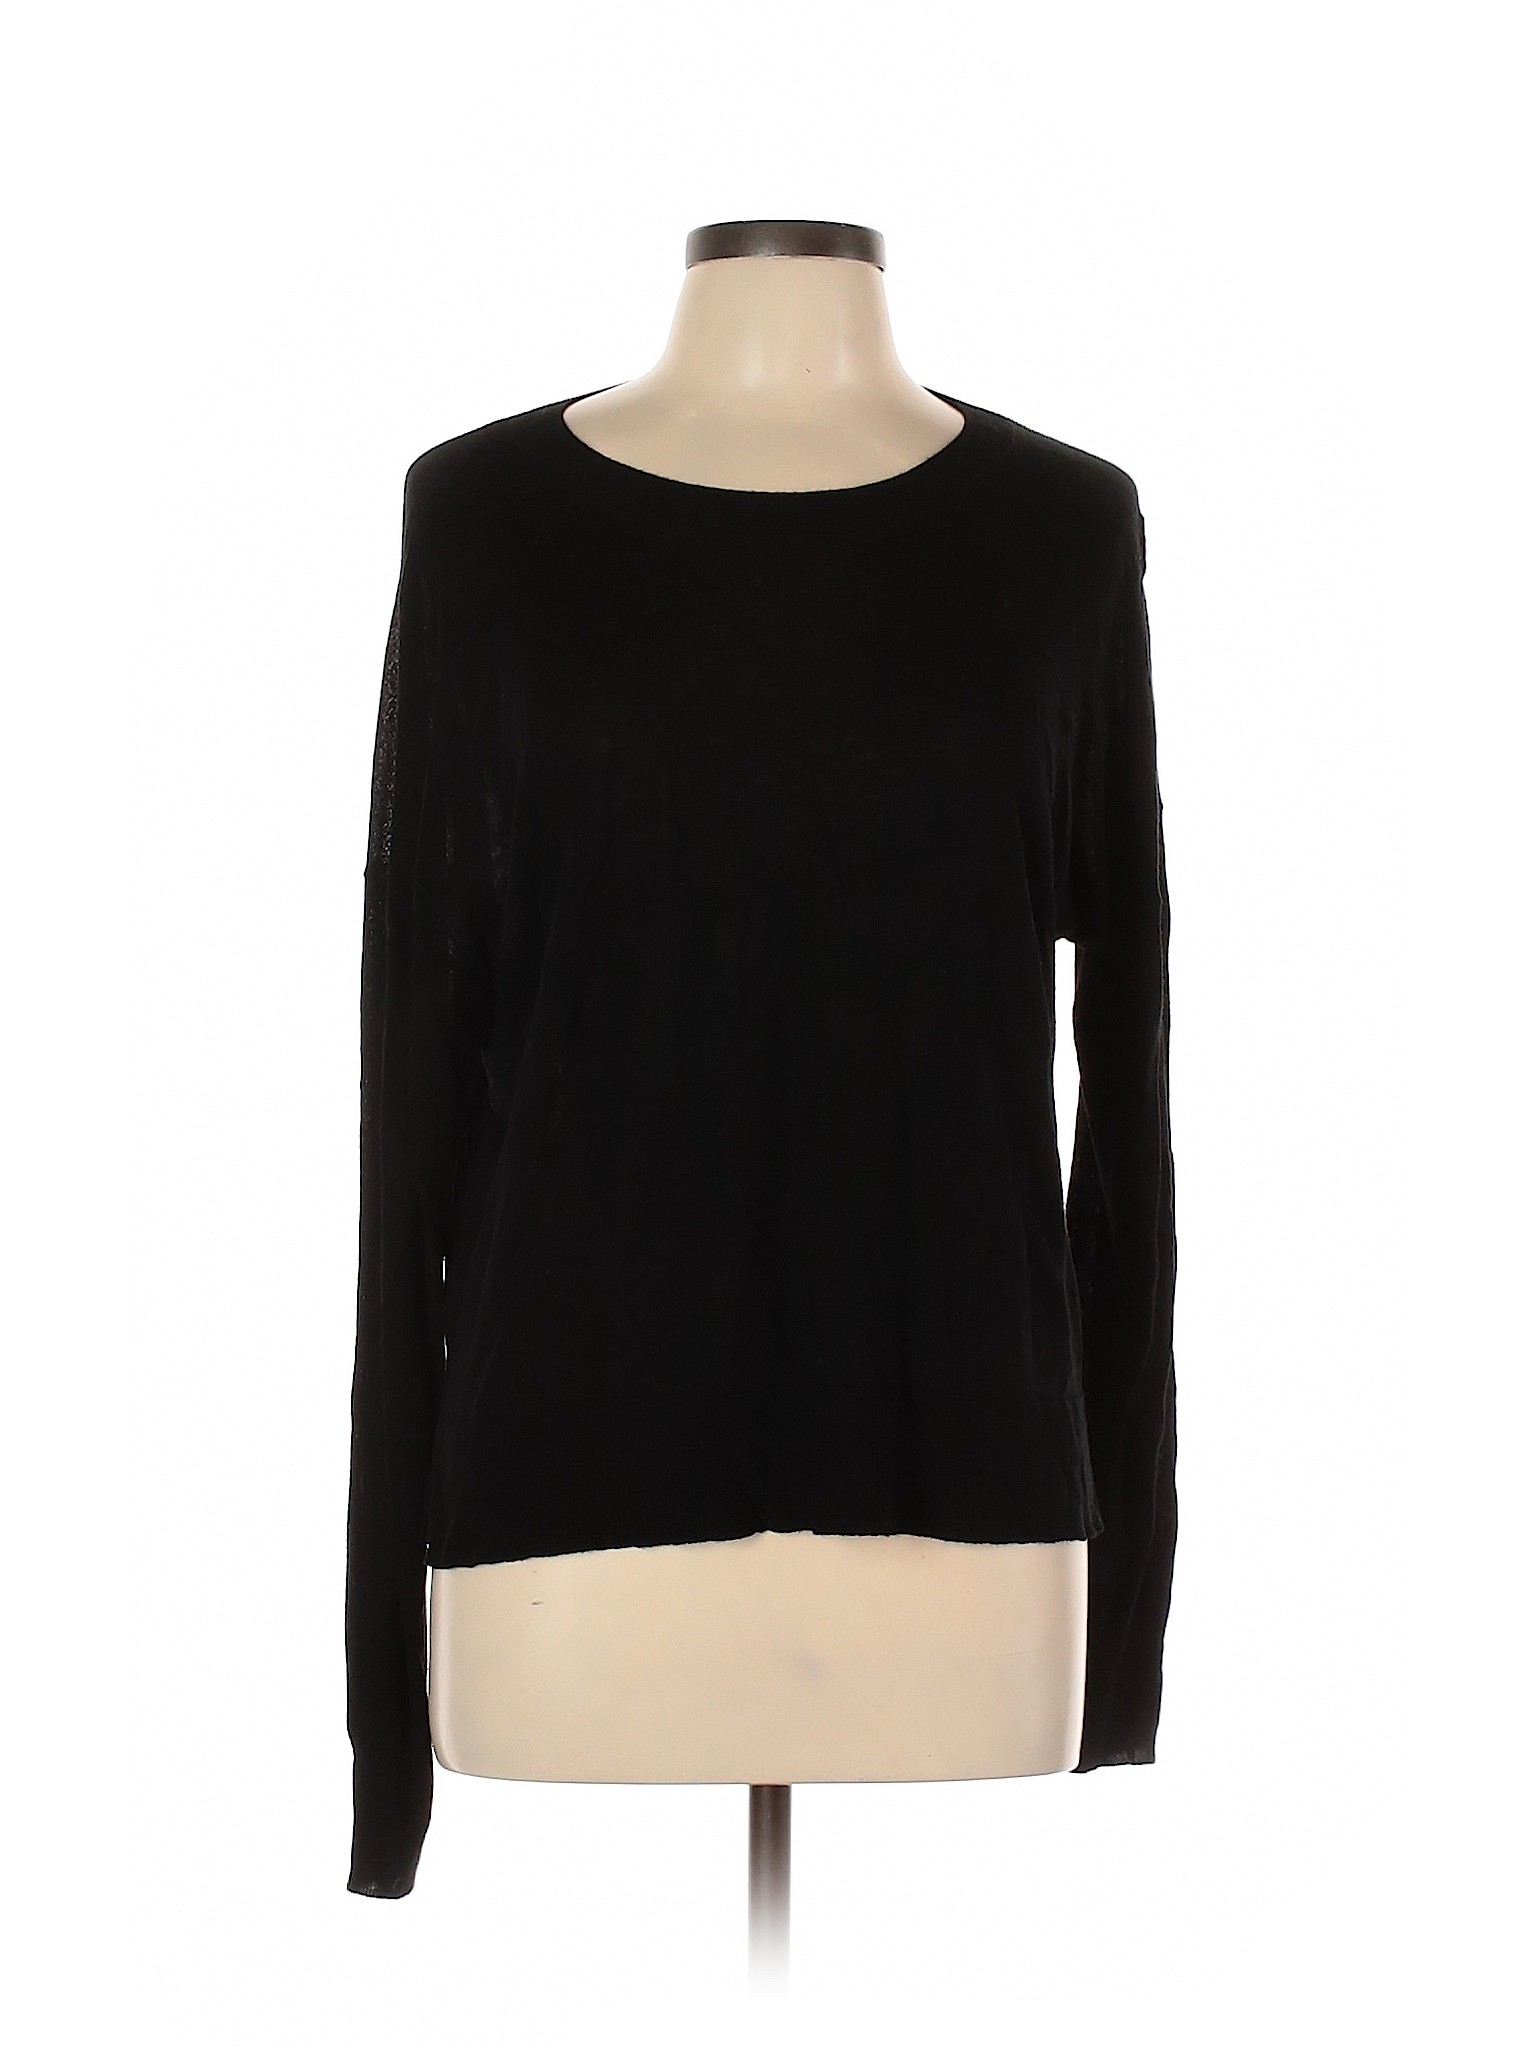 Zara Women Black Pullover Sweater L | eBay